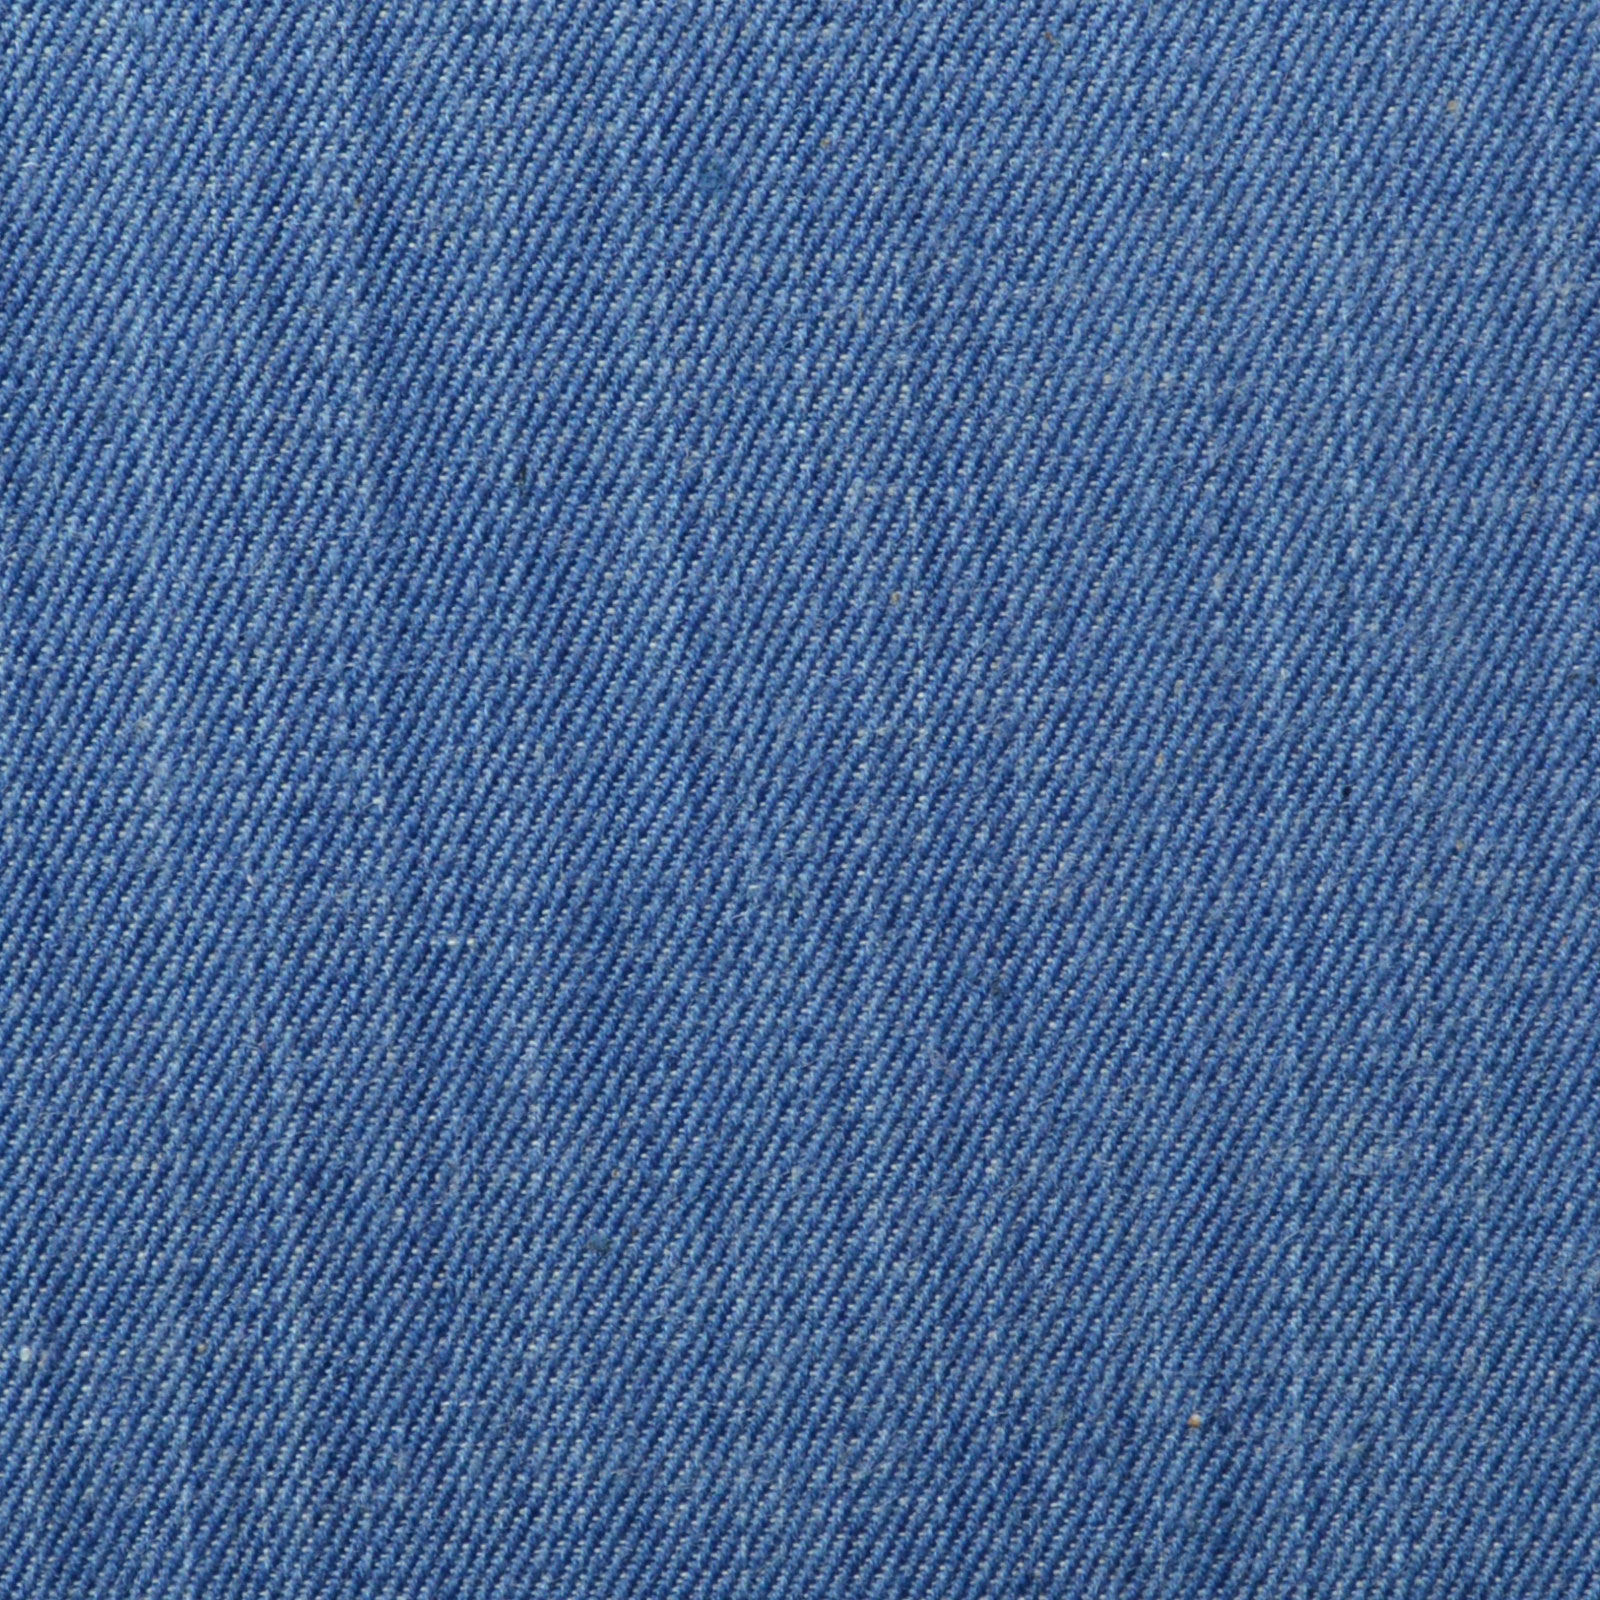 EDWIN ED-one jeans Japanese Selvedge Denim Fabric Slim Fit NWOT Unwashed Raw  | eBay